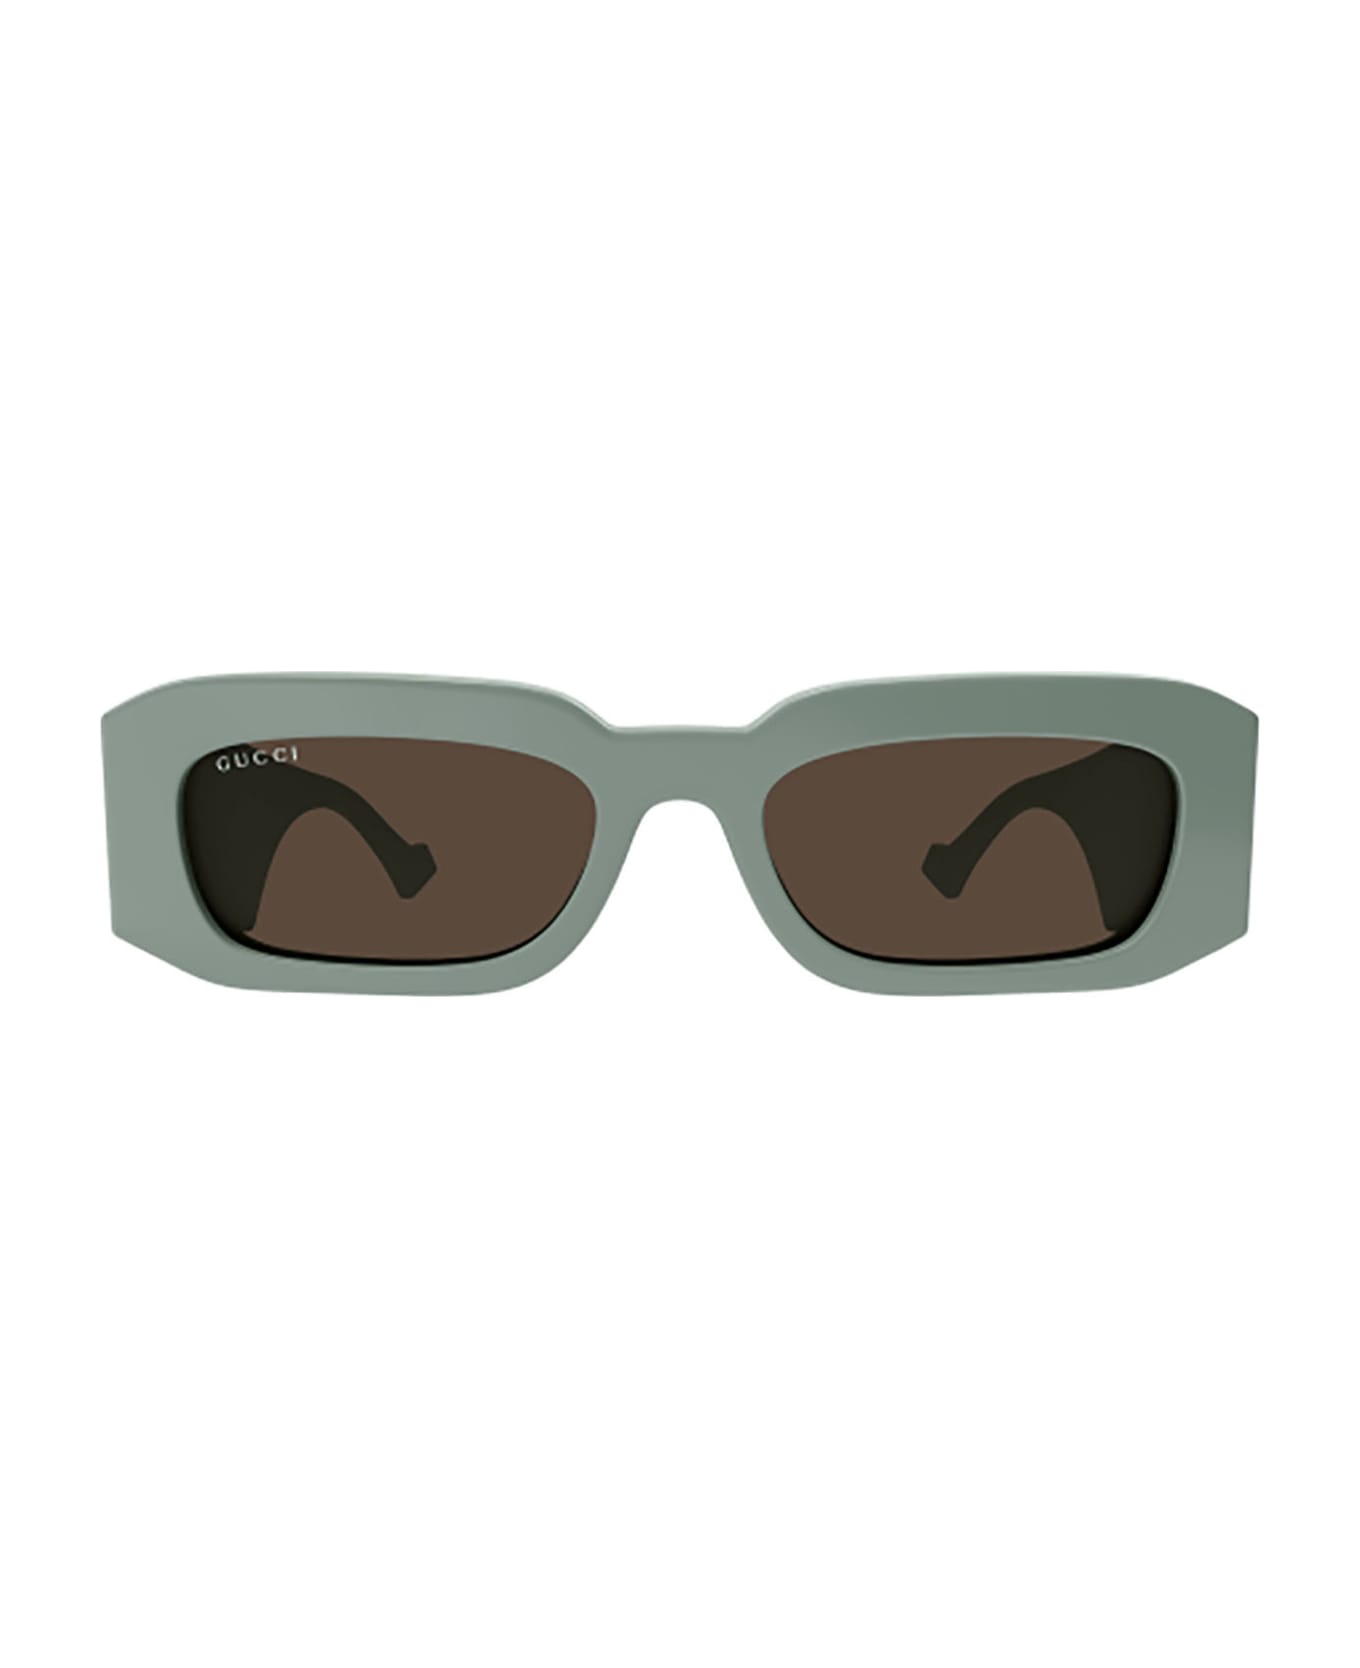 Gucci Eyewear GG1426S Sunglasses - Green Green Brown